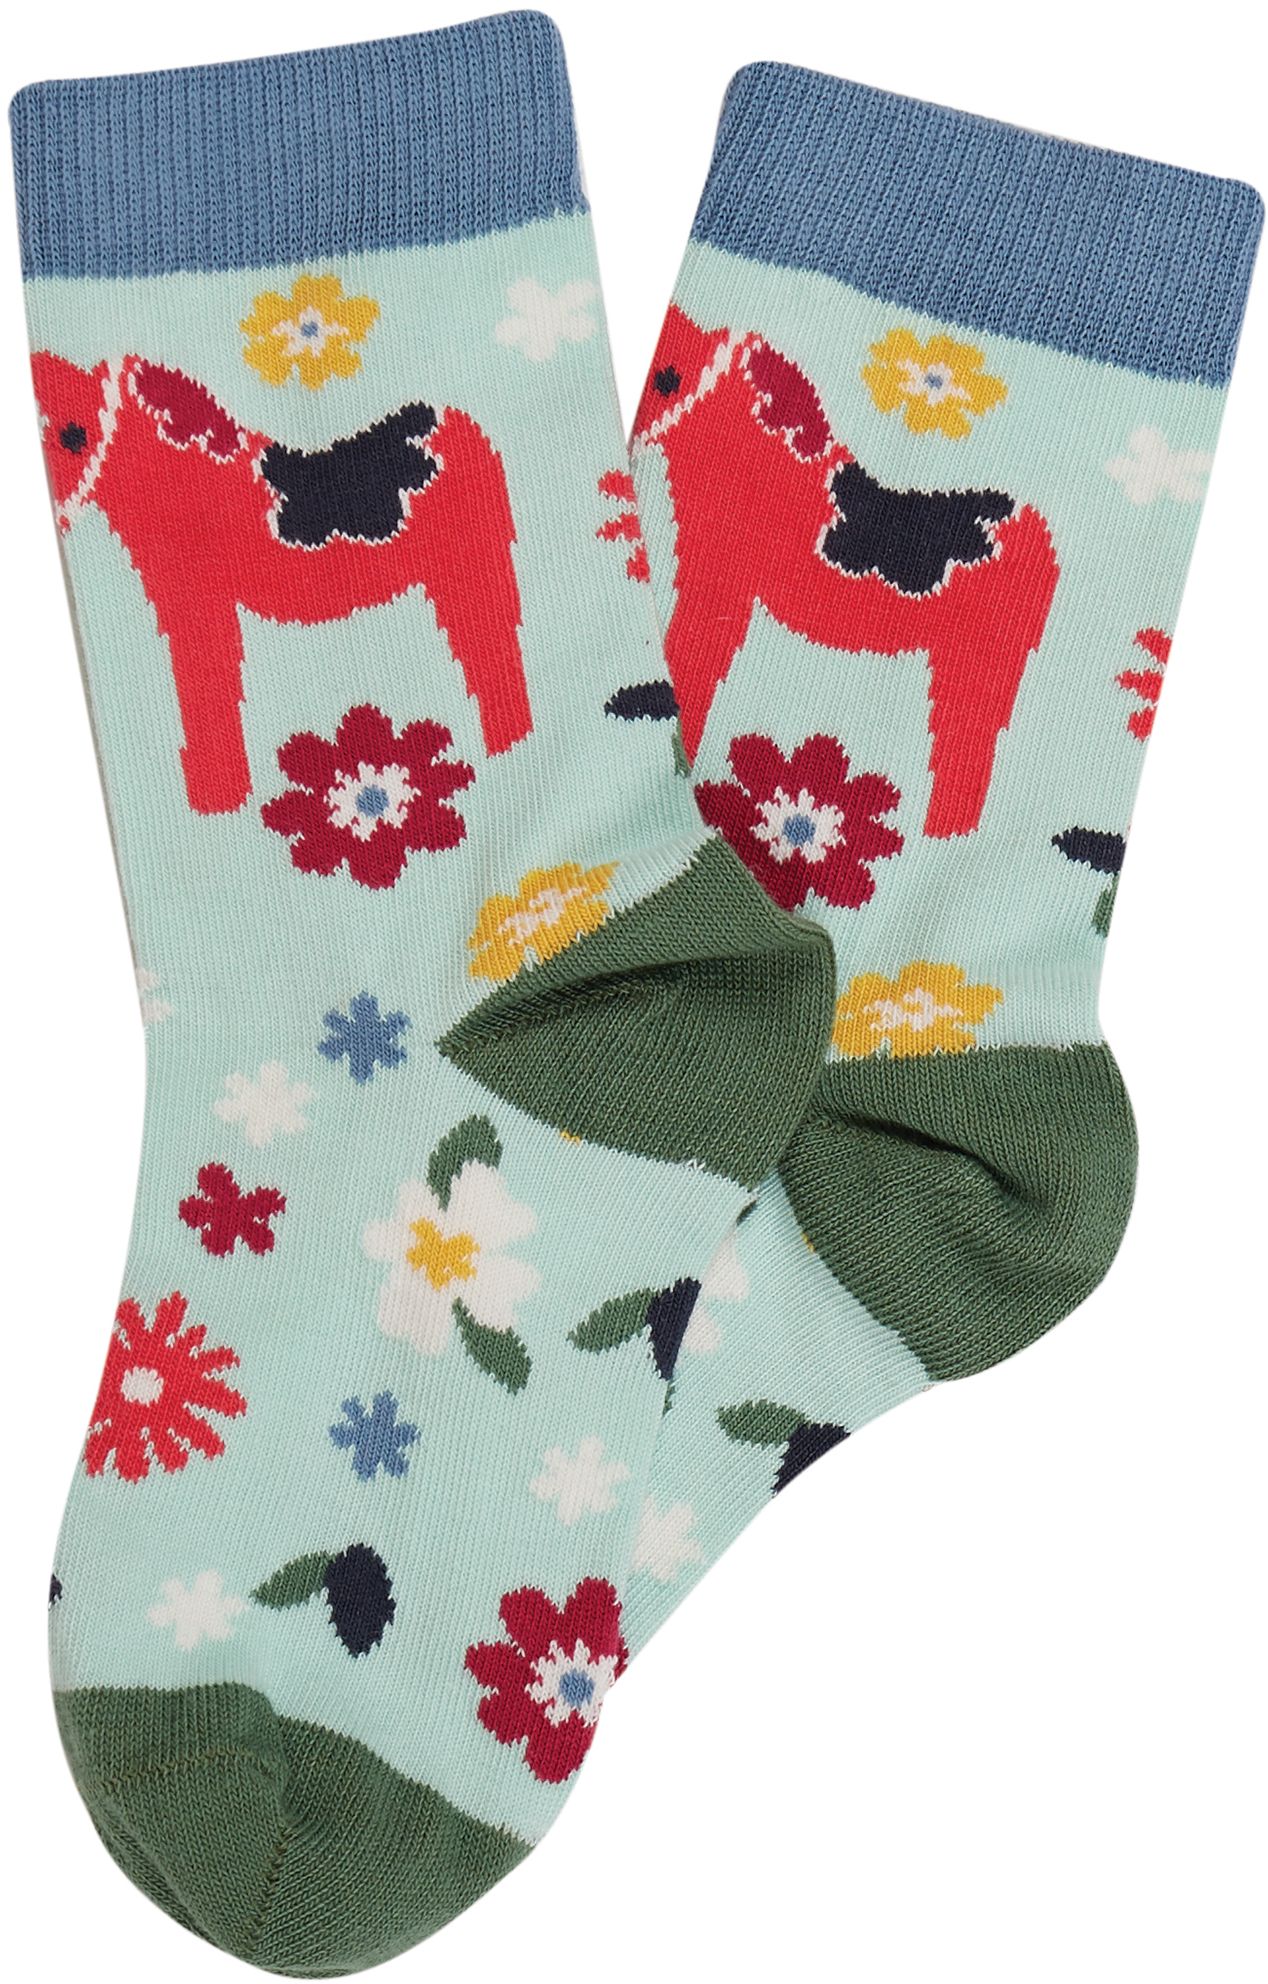 Gemusterte Kinder-Socken im 3er-Pack mit Pferd